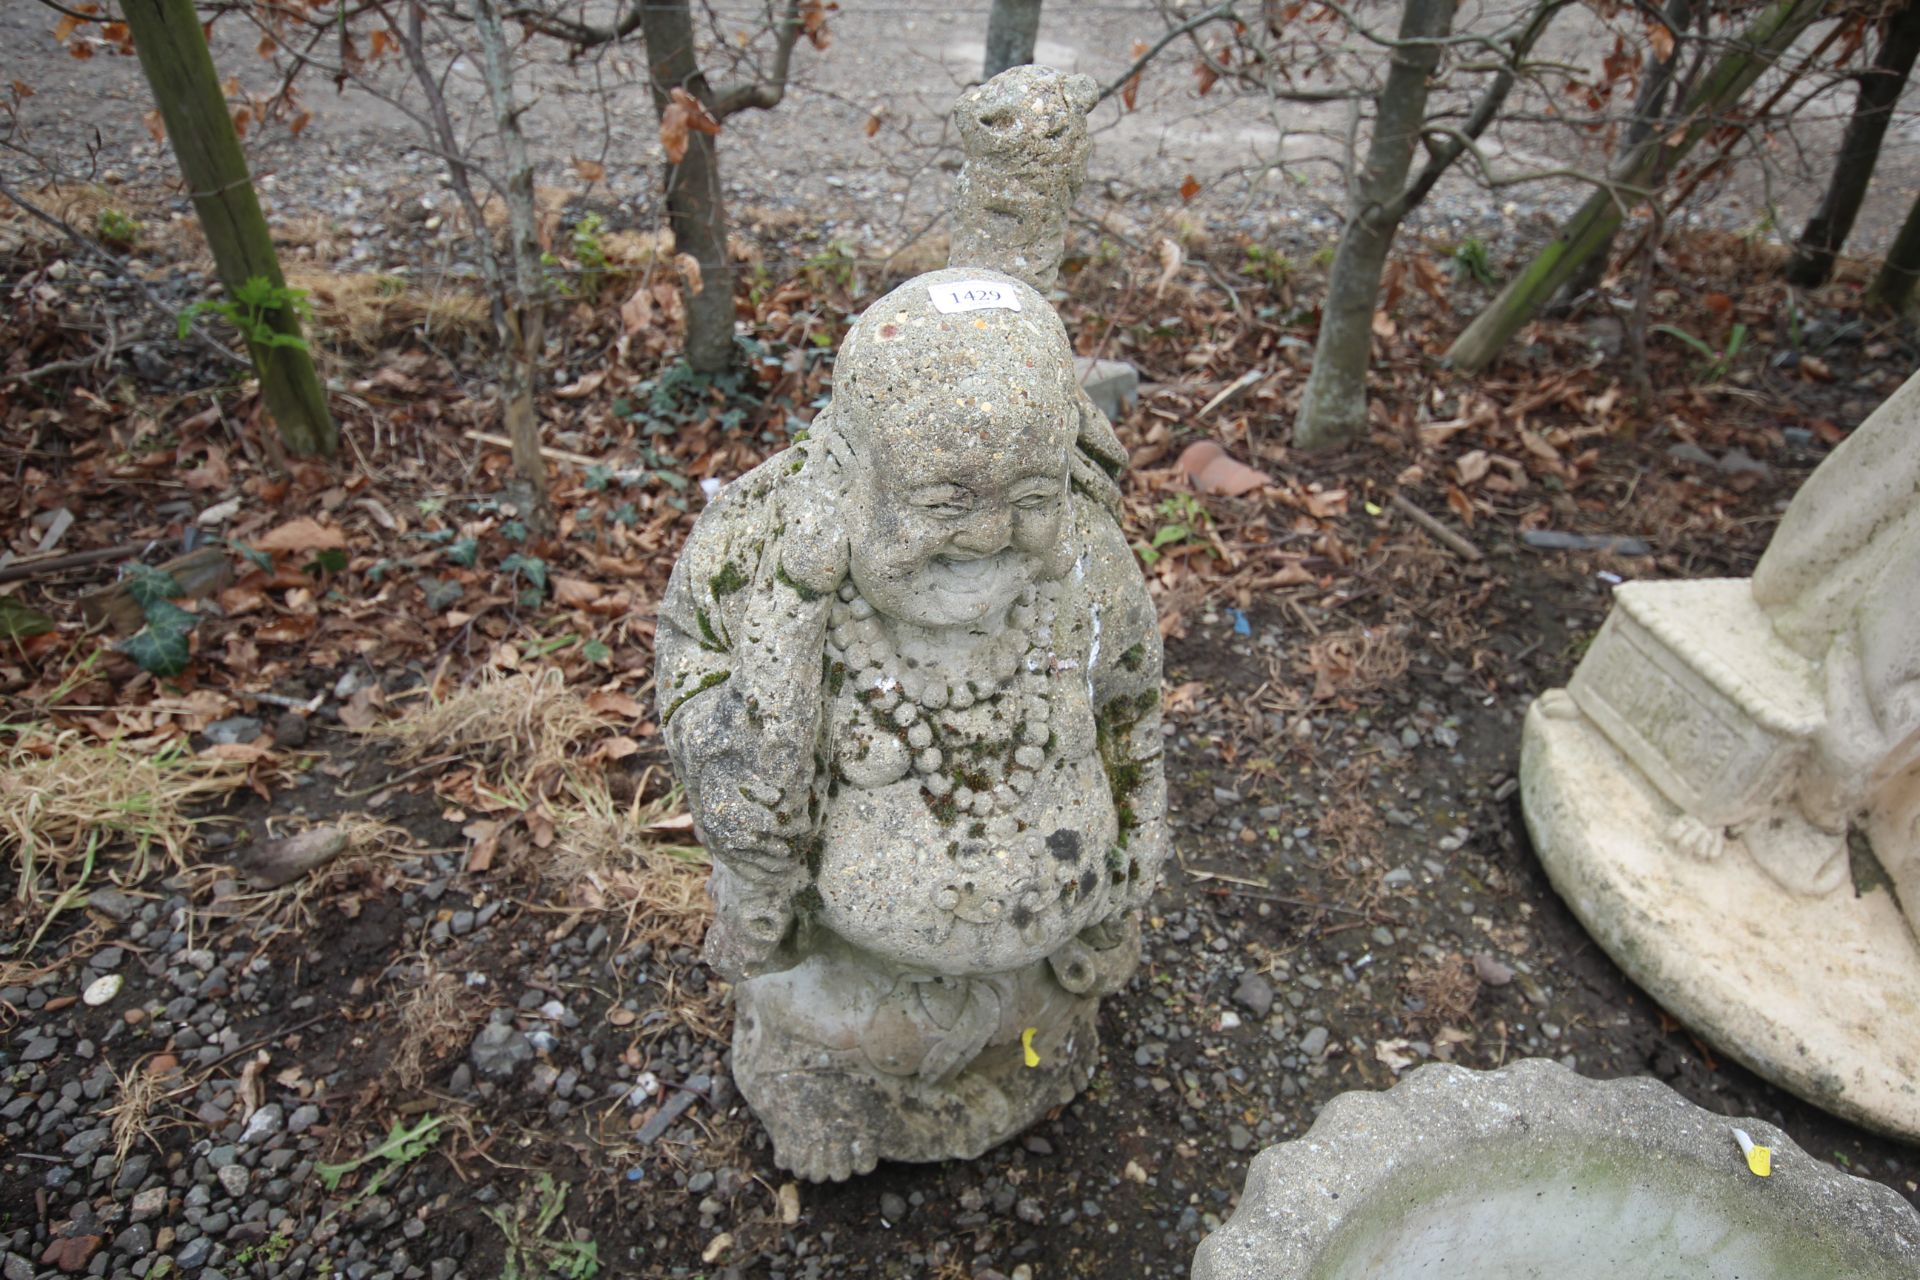 A concrete garden ornament in the form of a Buda